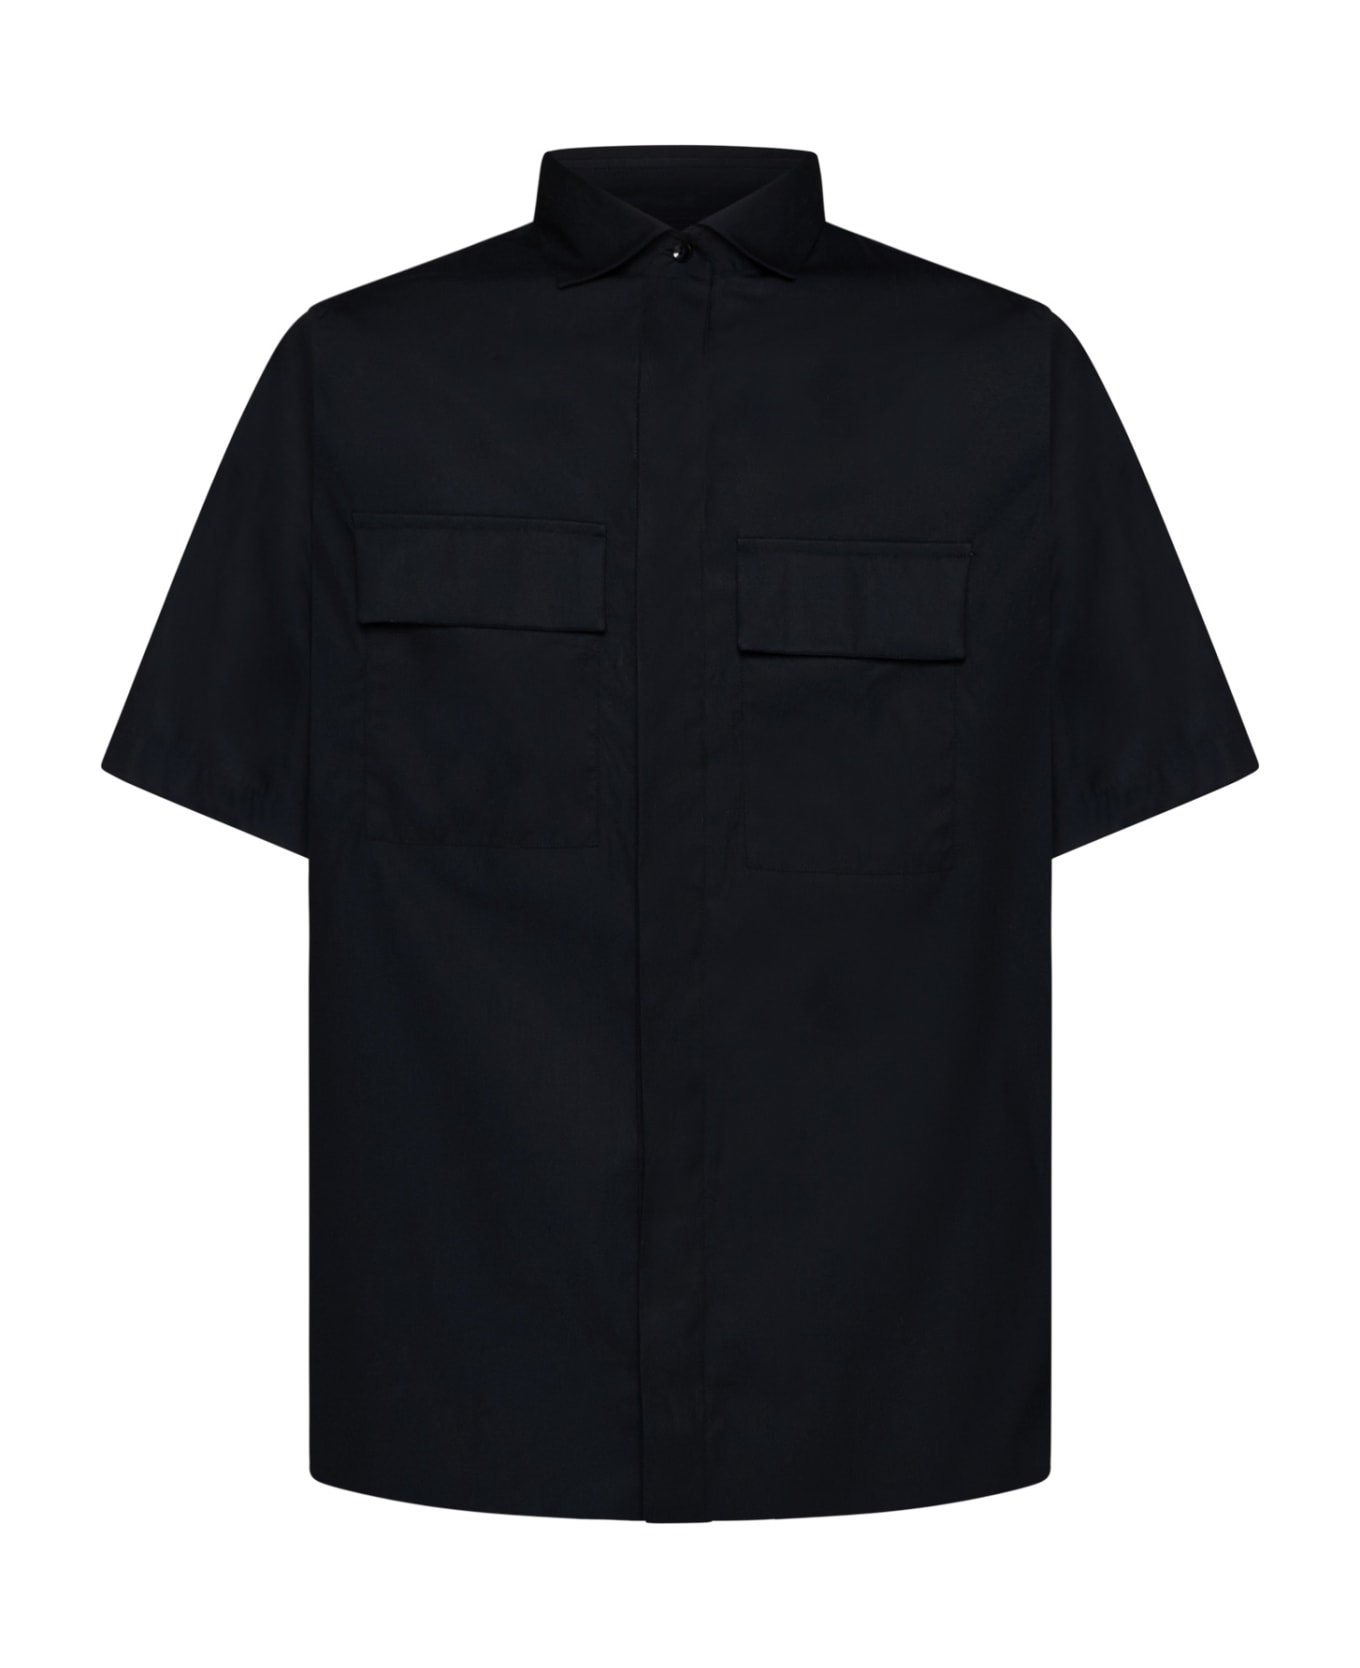 Low Brand Shirt - Jet black